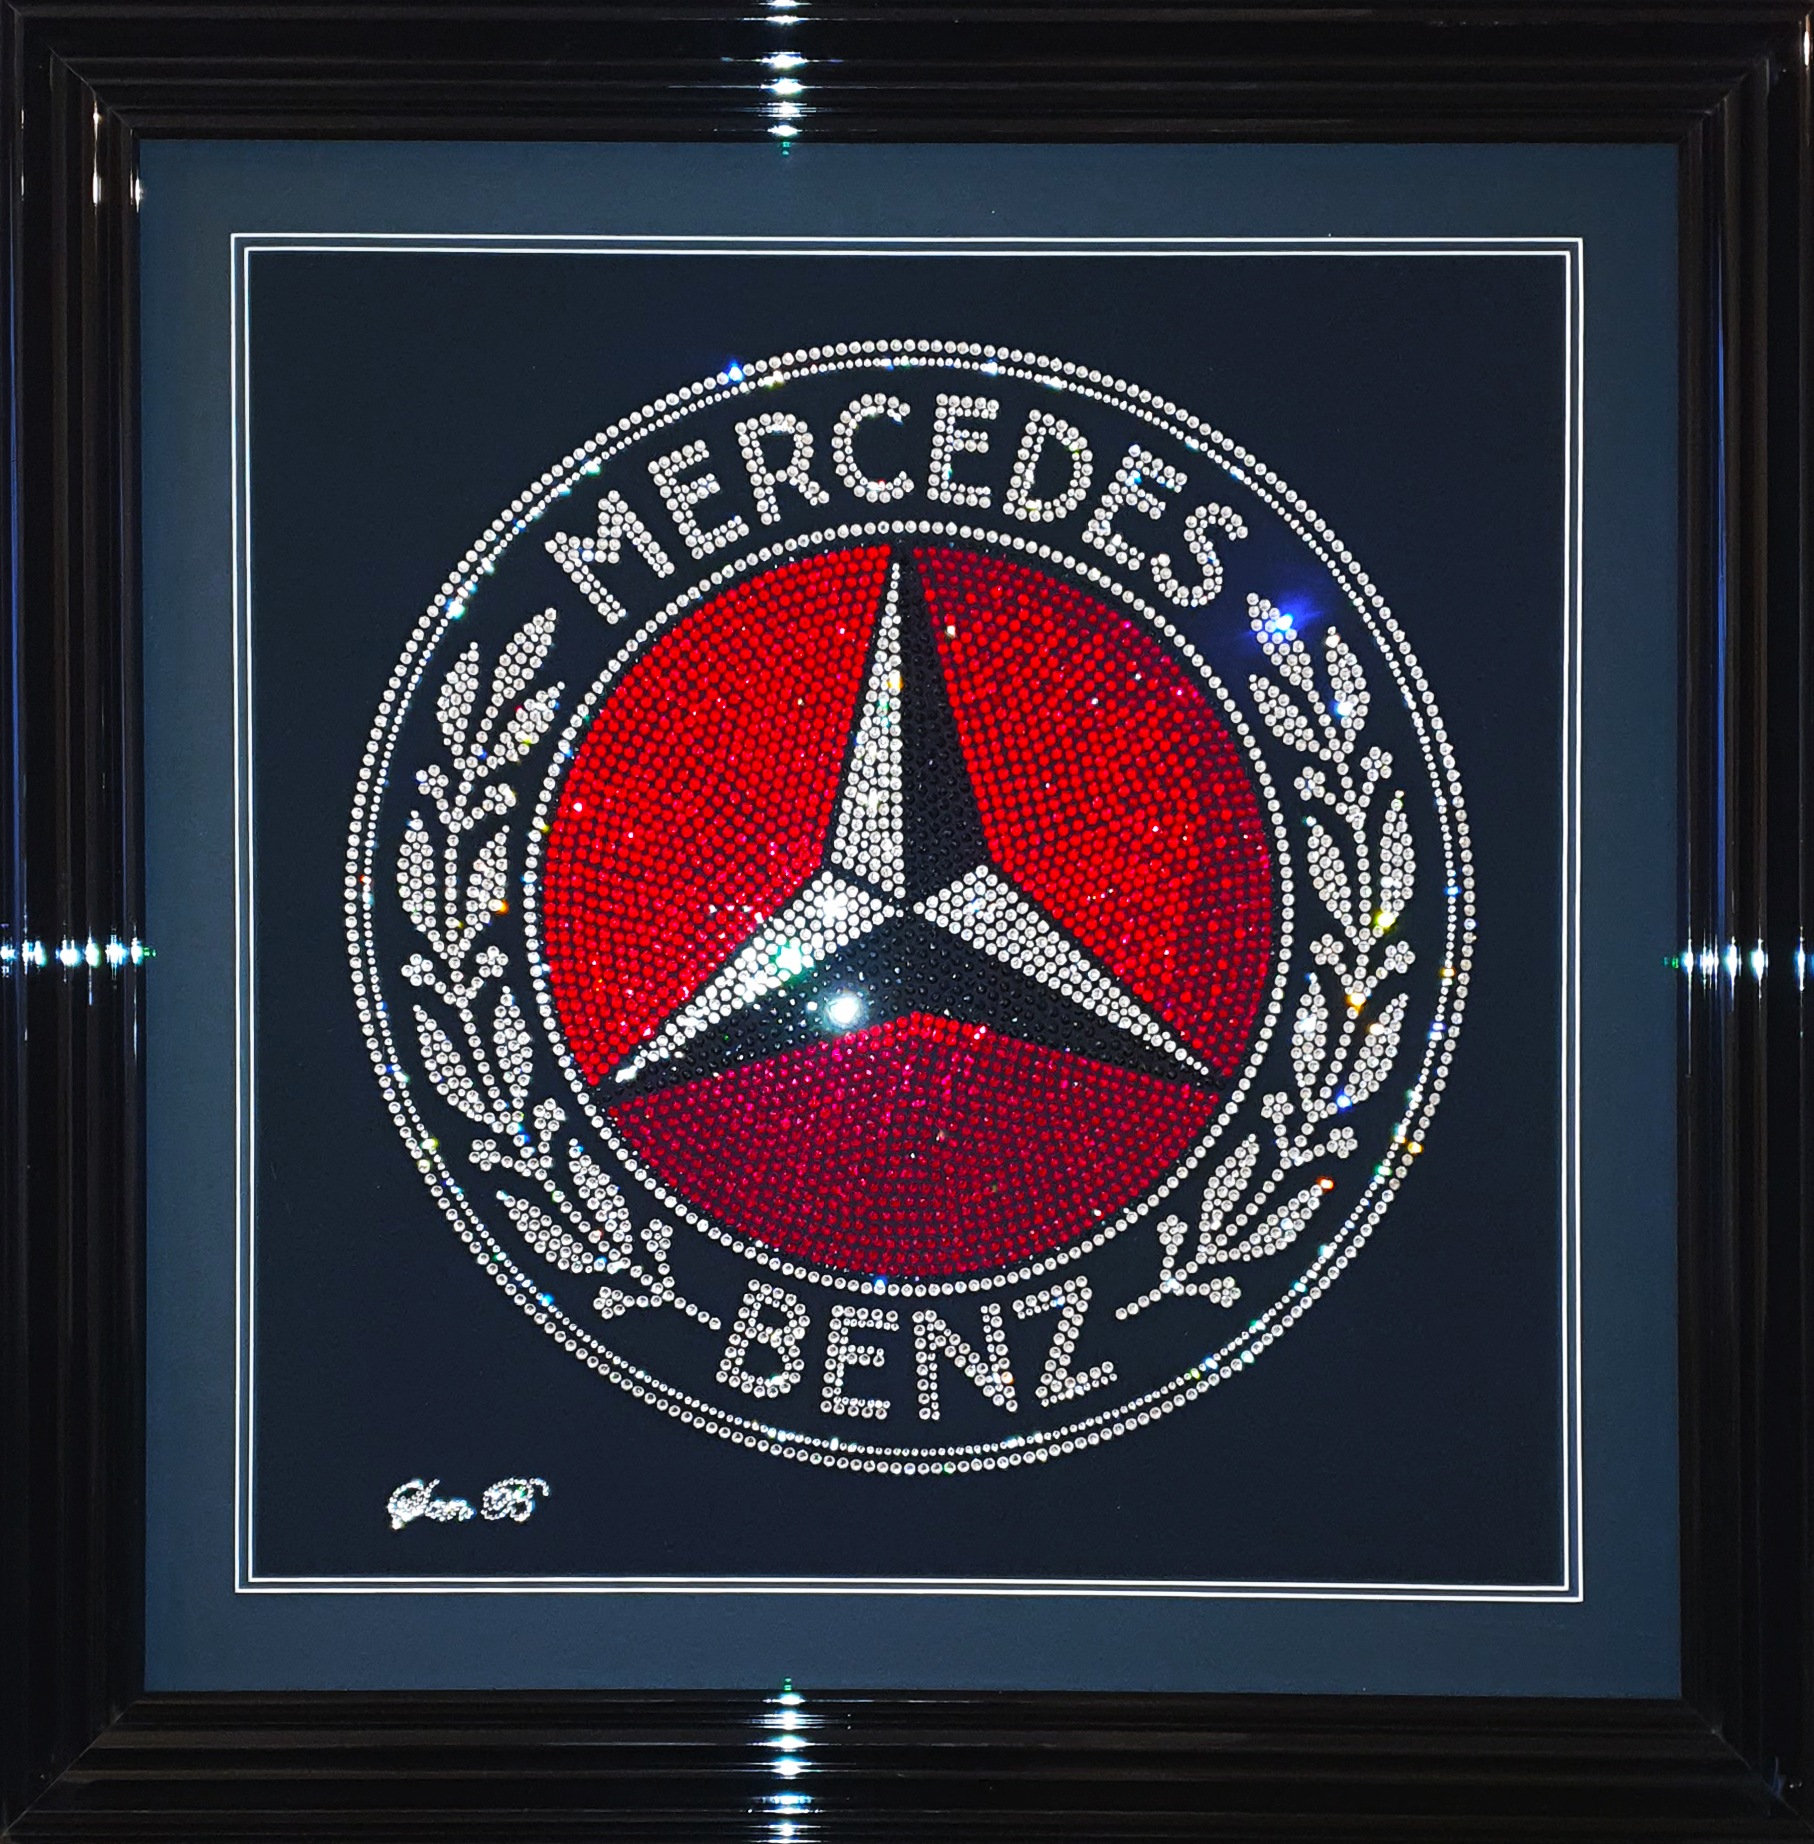 Mercedes Classic